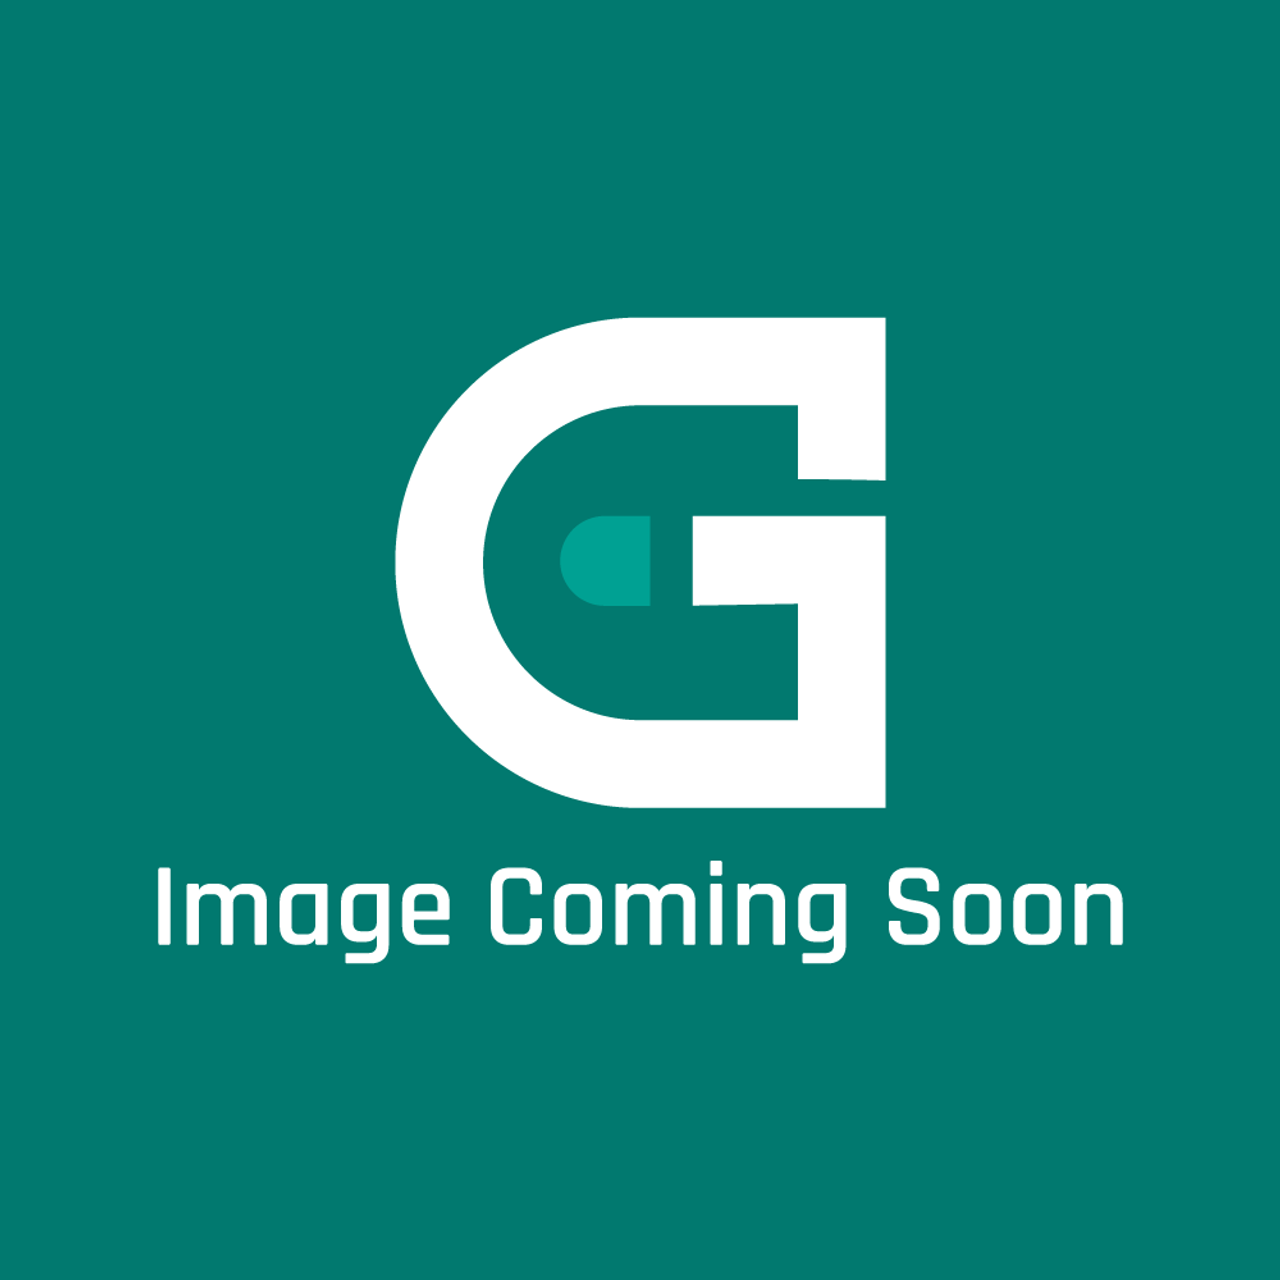 Garland 4532868 - Platen/Cowl Assy 220Vwye - Image Coming Soon!